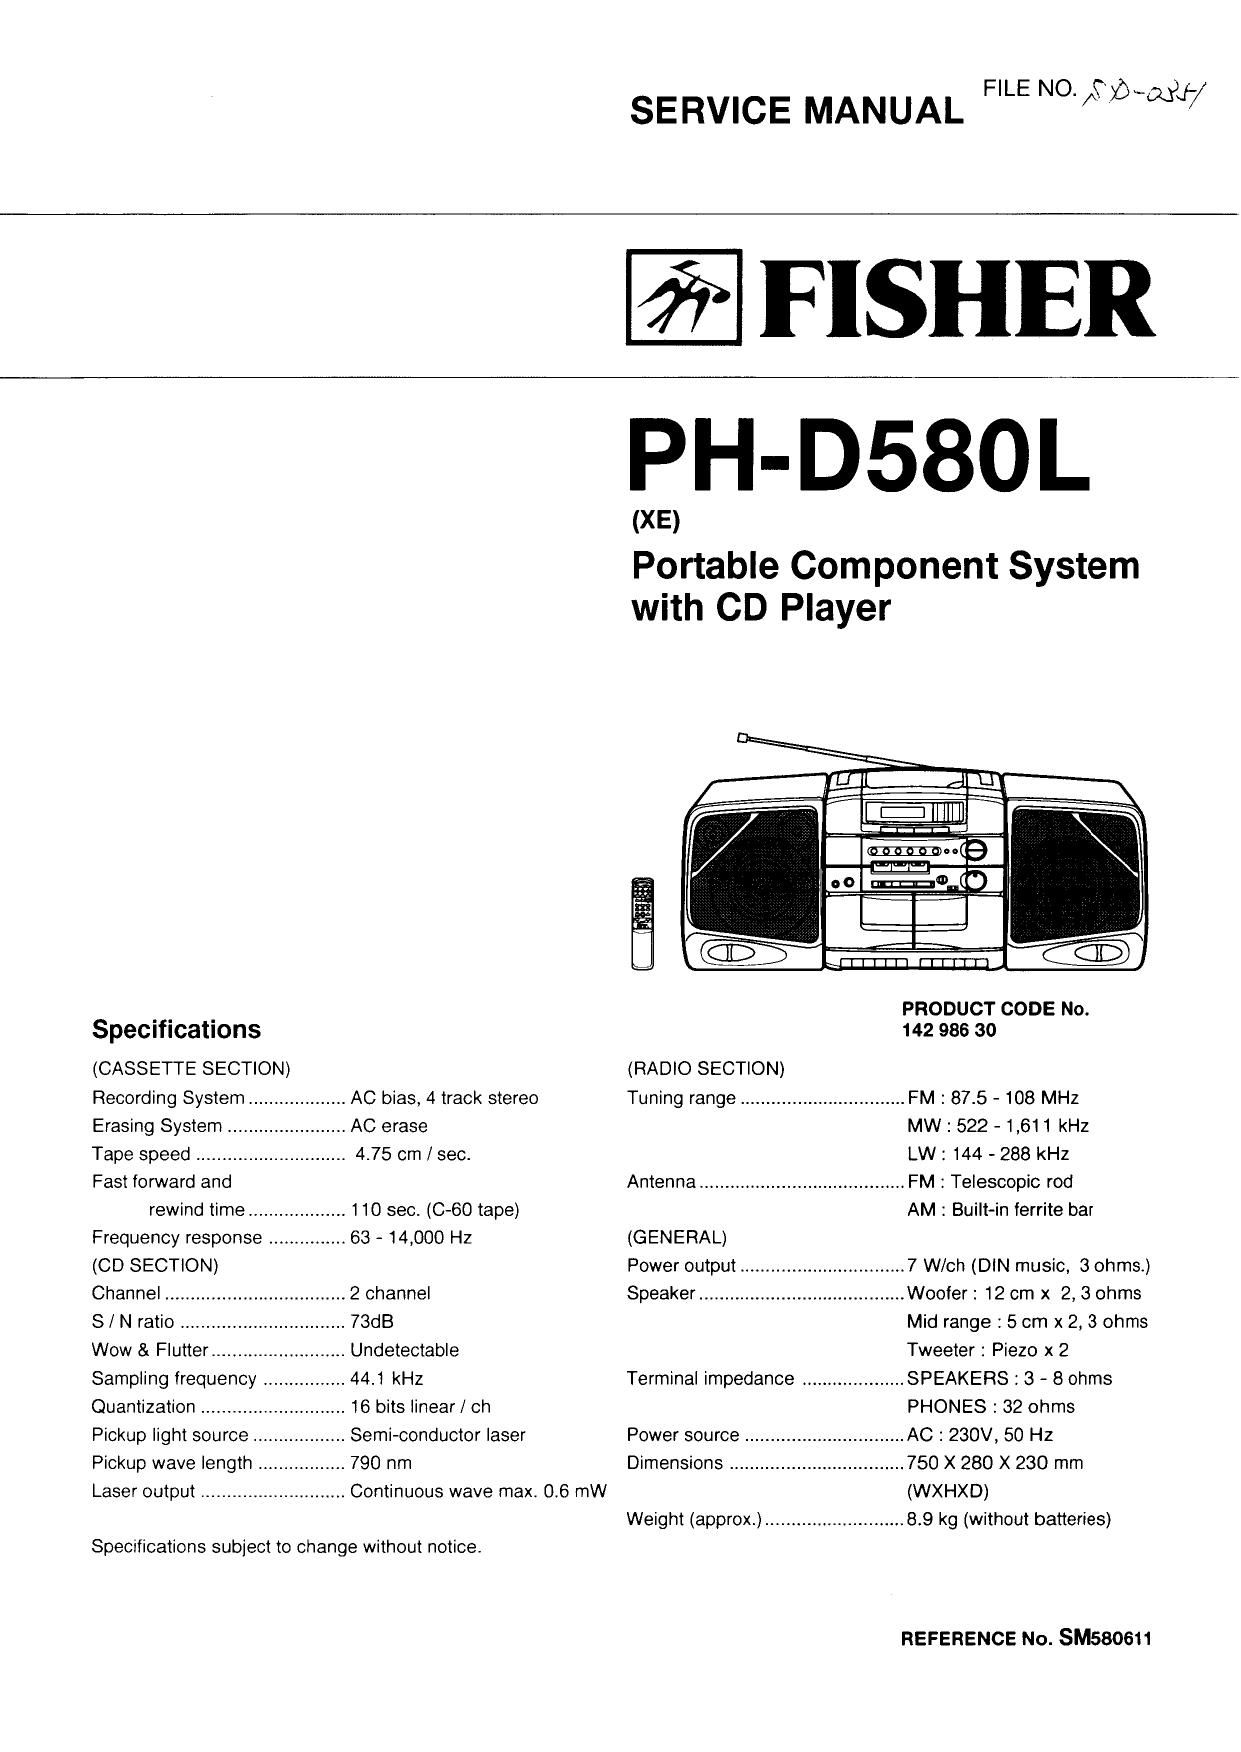 Fisher PHD 580 L Service Manual